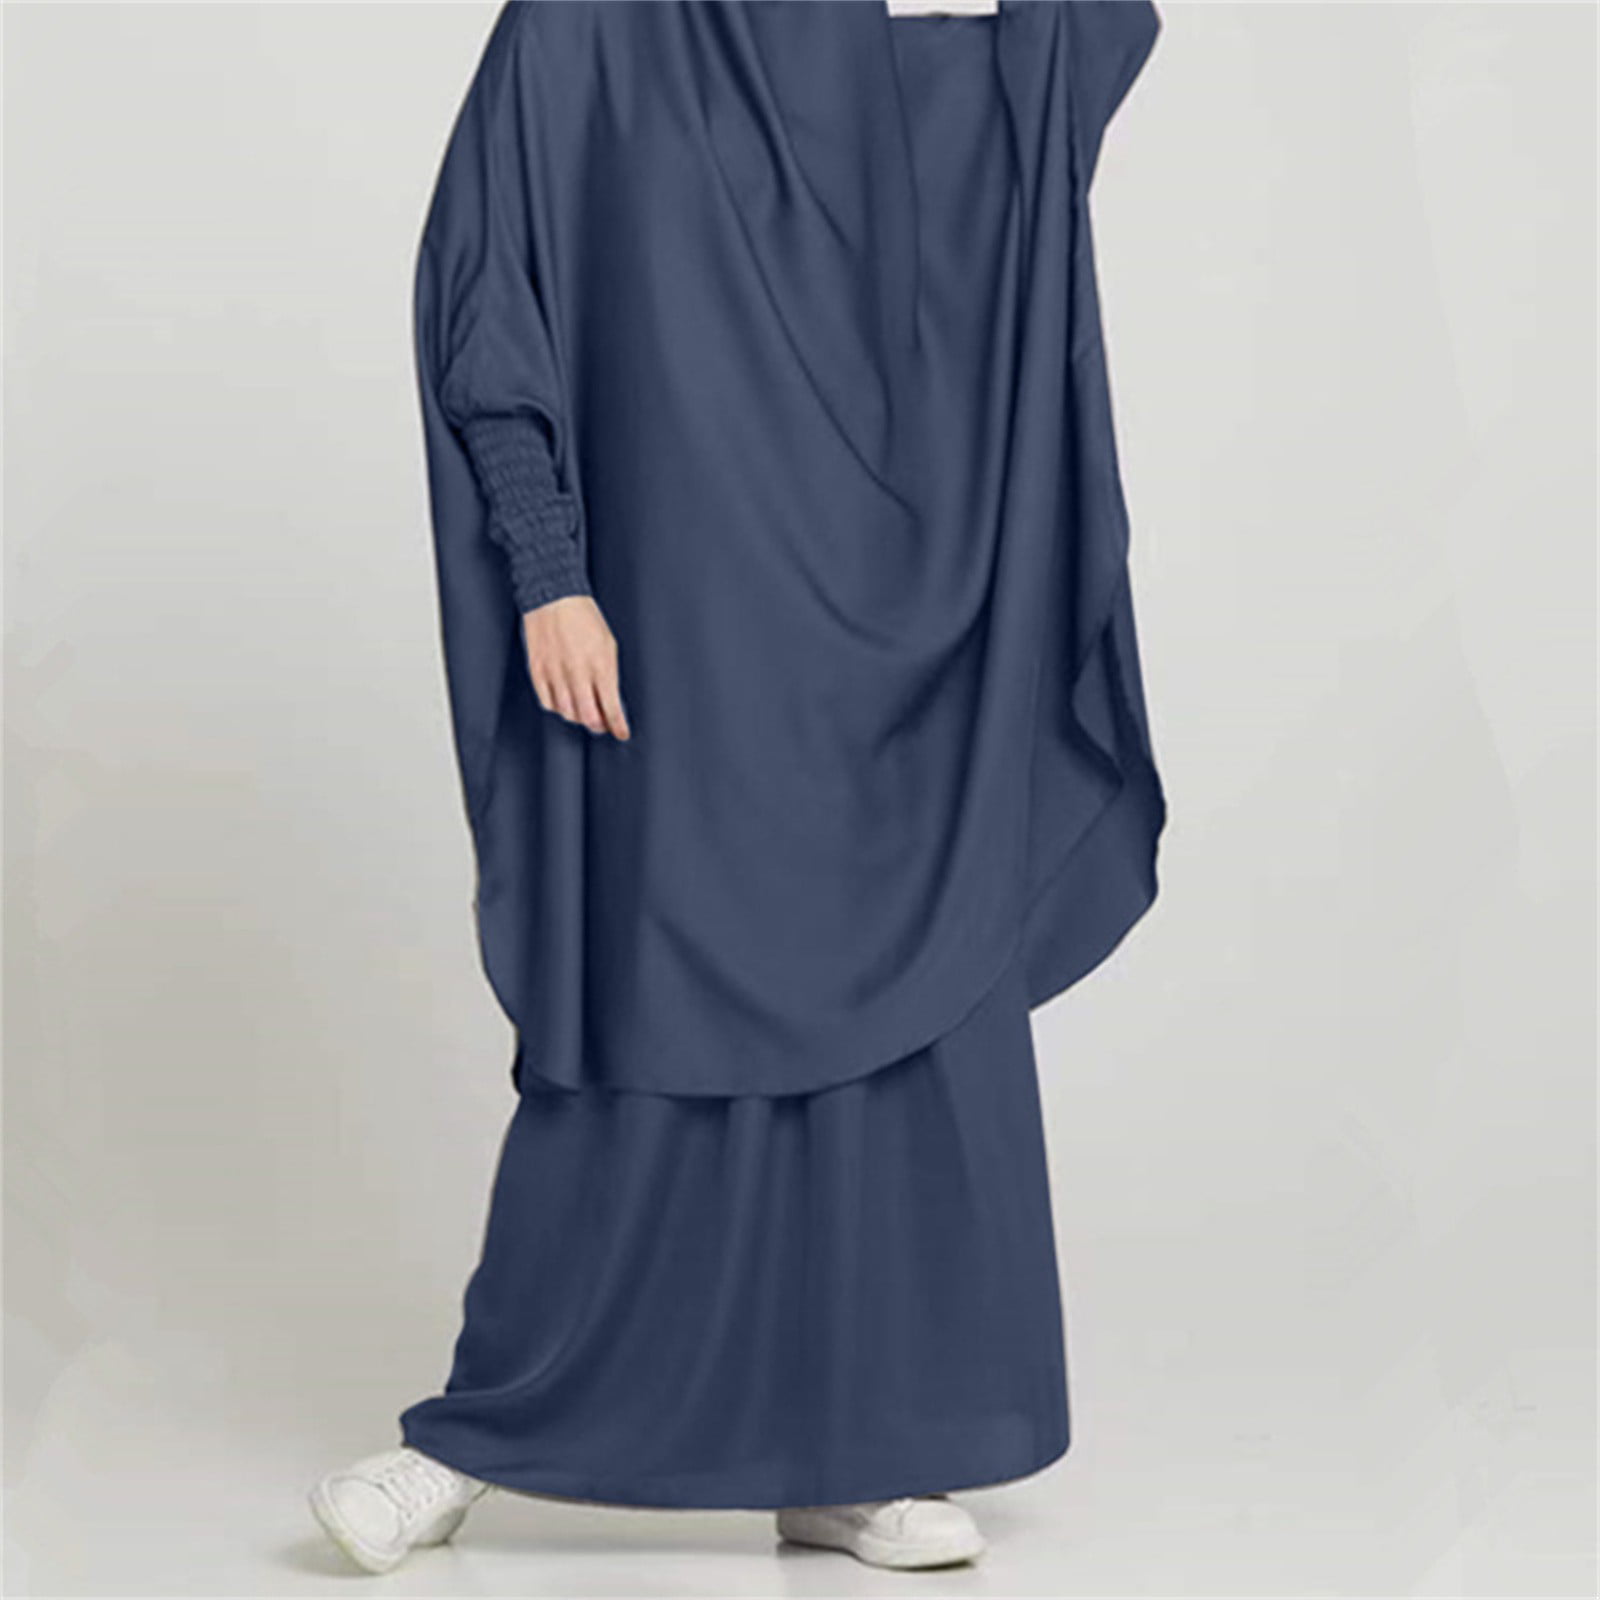 Lisingtool Work Pants for Women Women's Casual Solid Robe Abaya